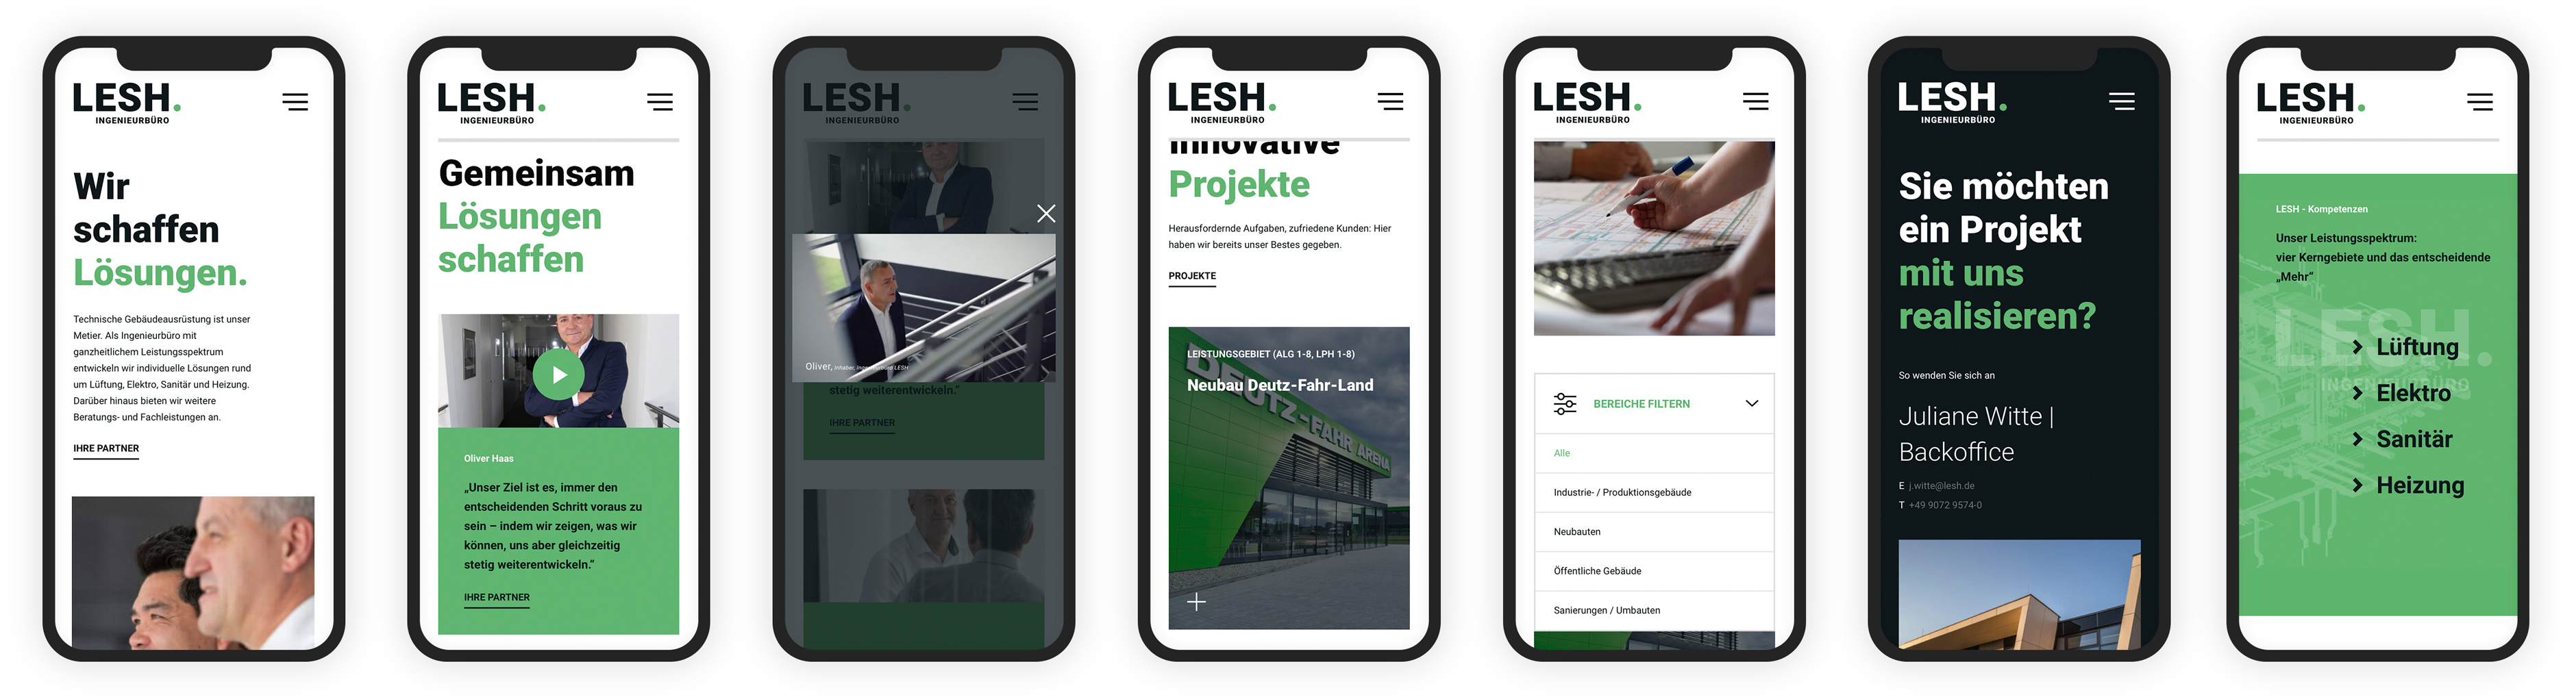 LESH Website